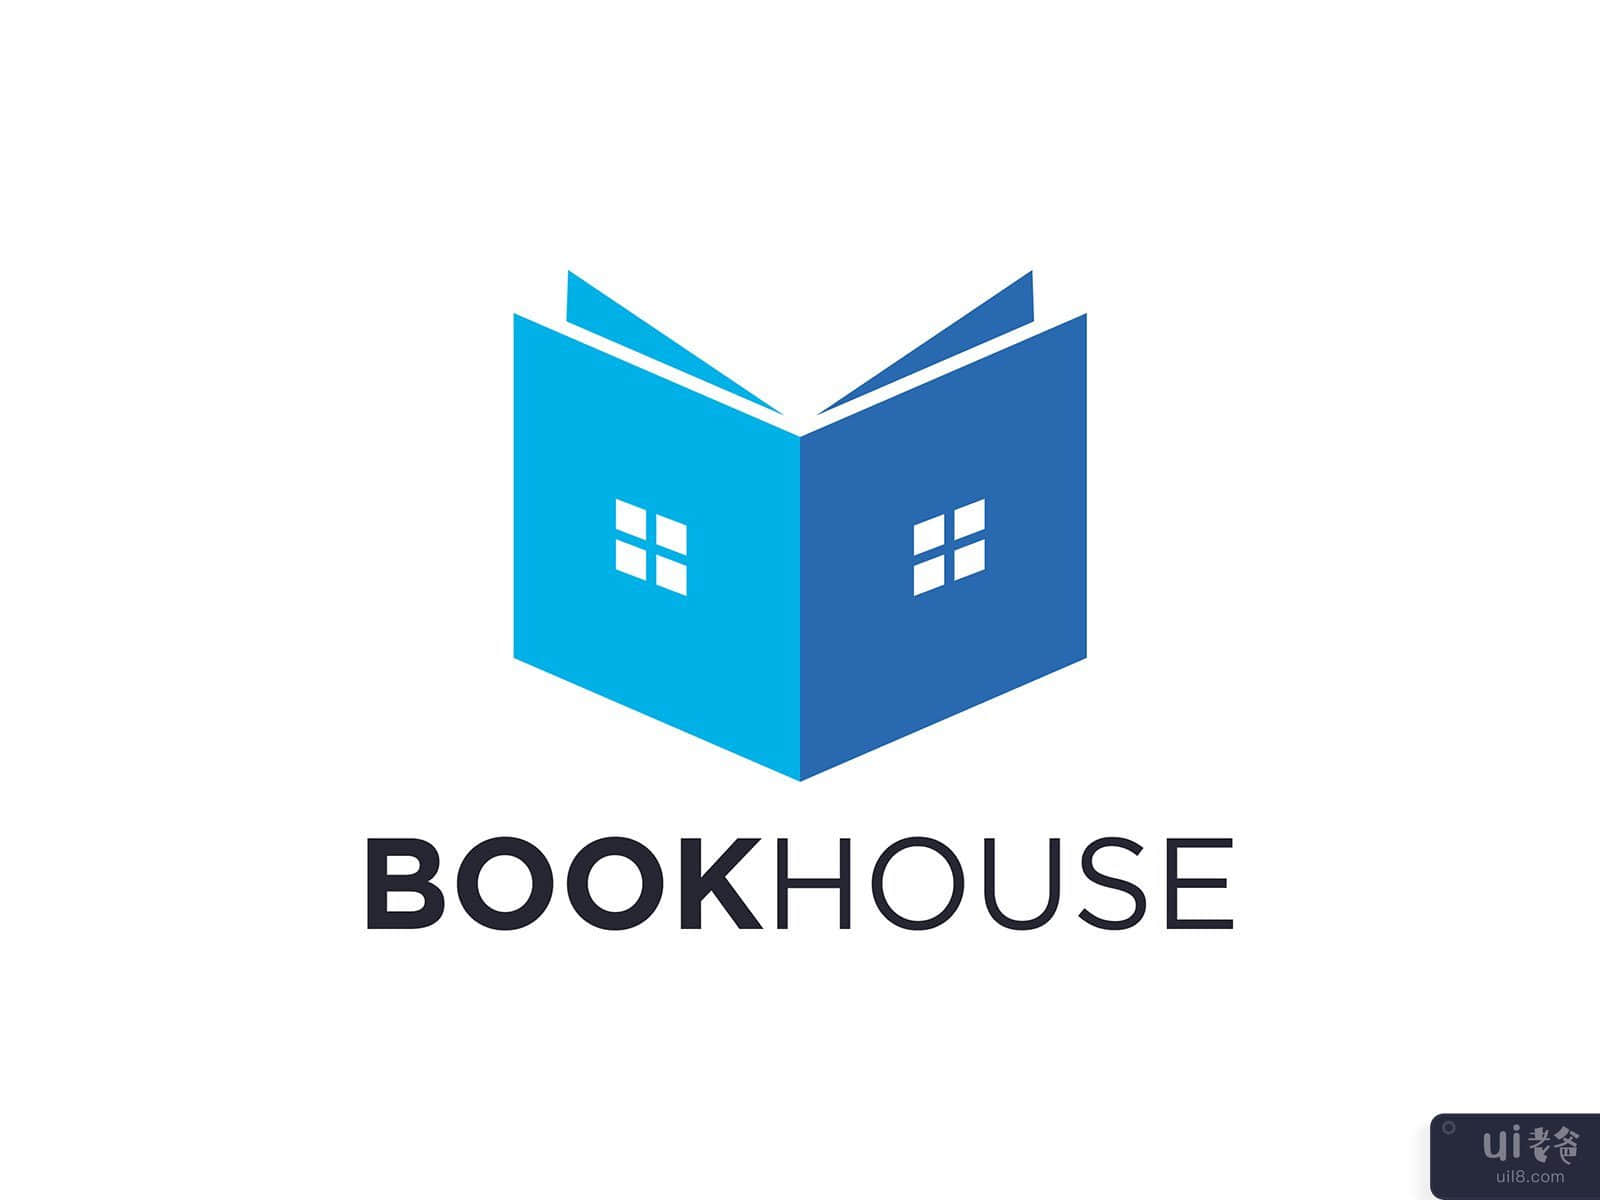 Book and house for logo designs concept editable vector